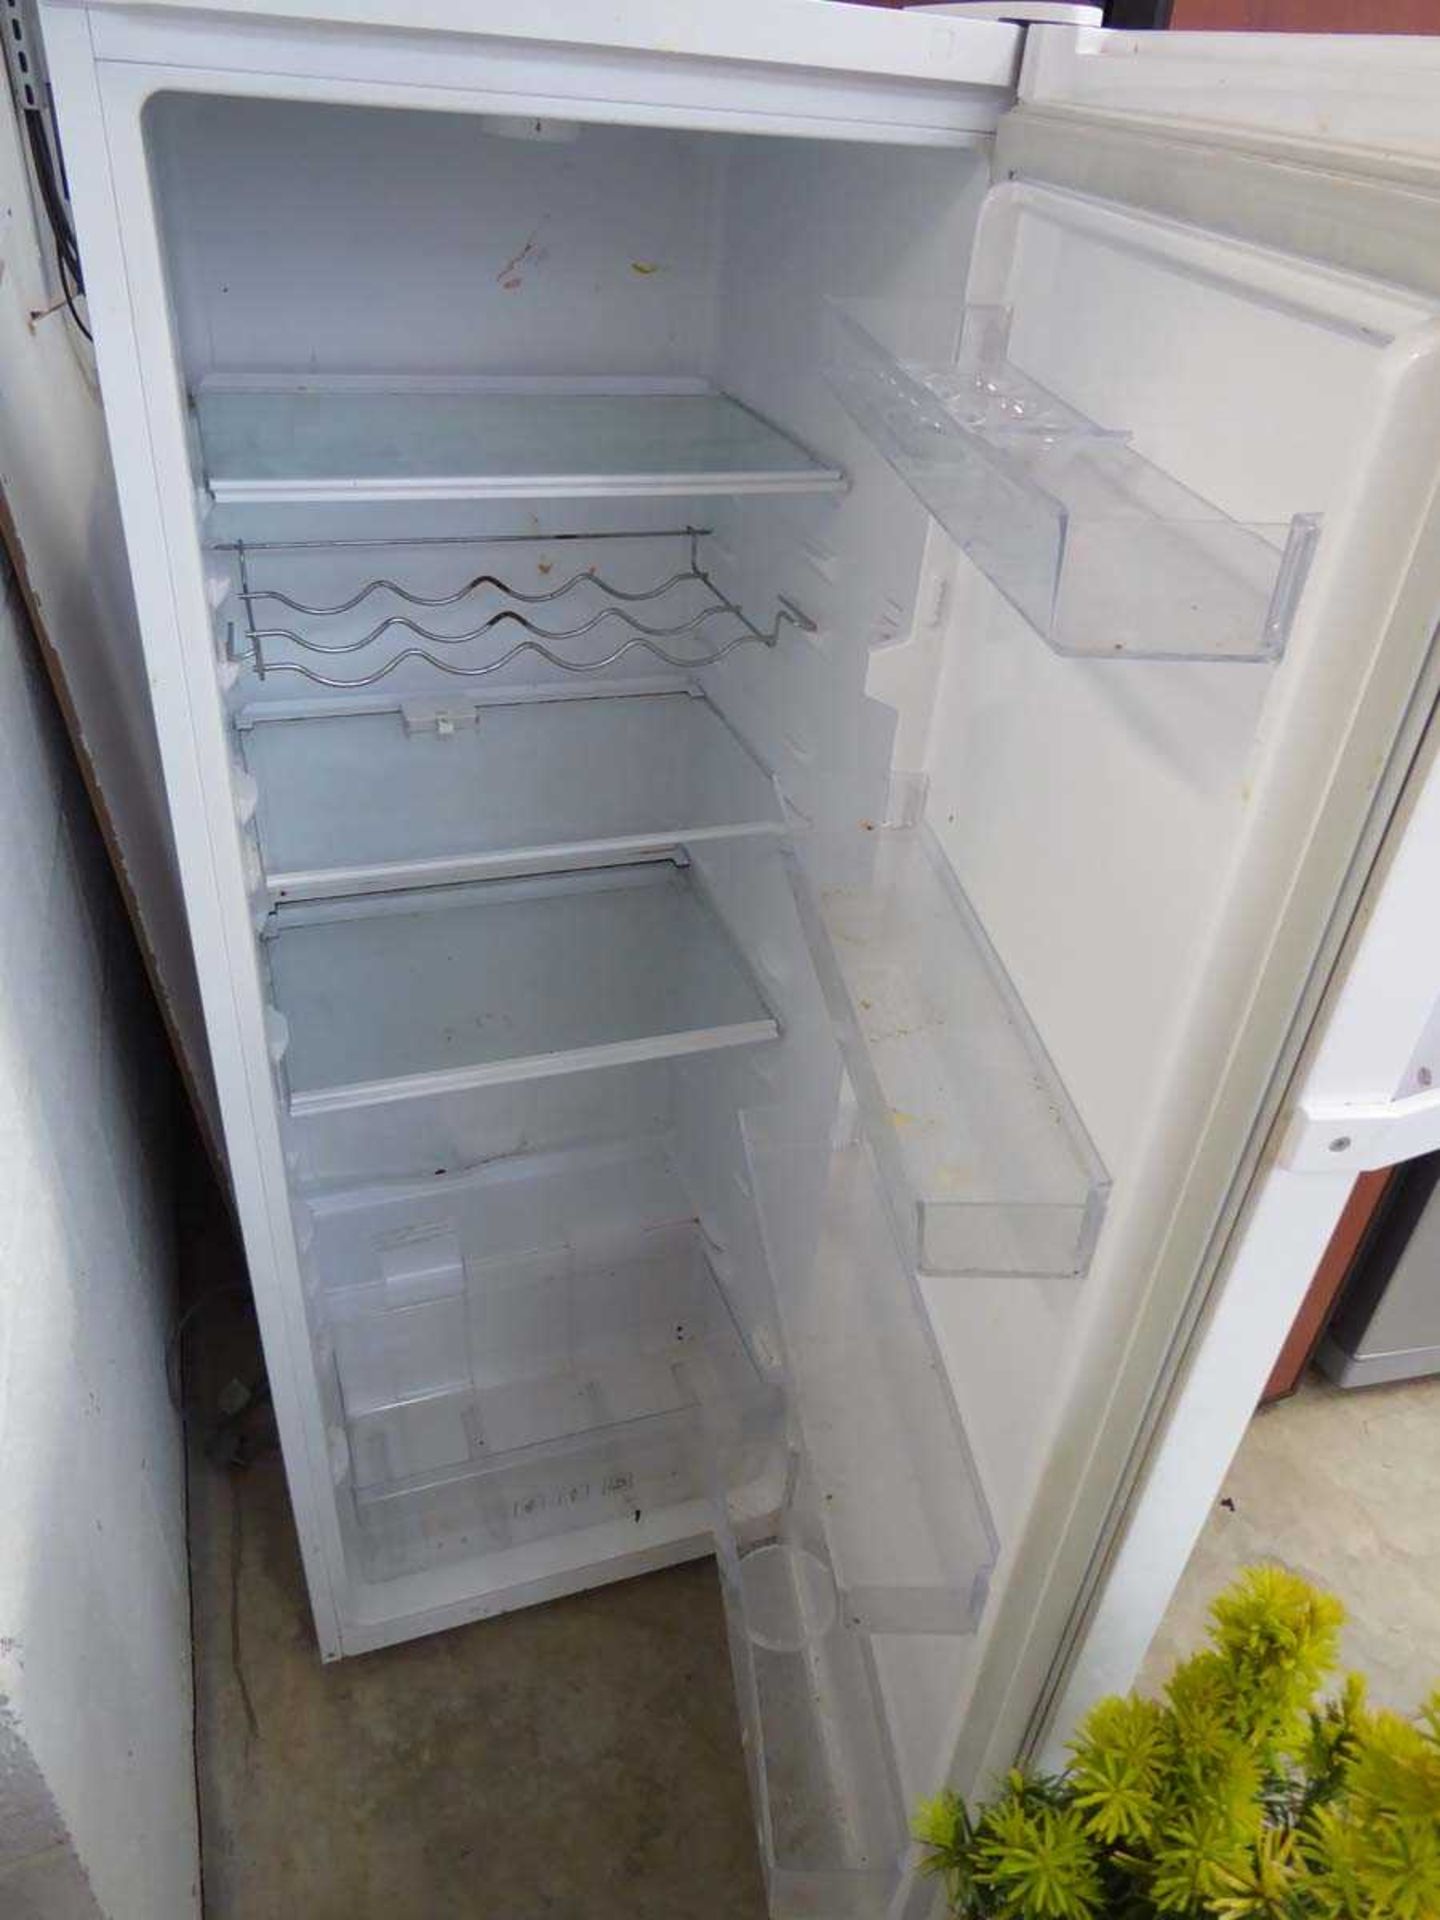 Beko larder fridge - Image 2 of 2